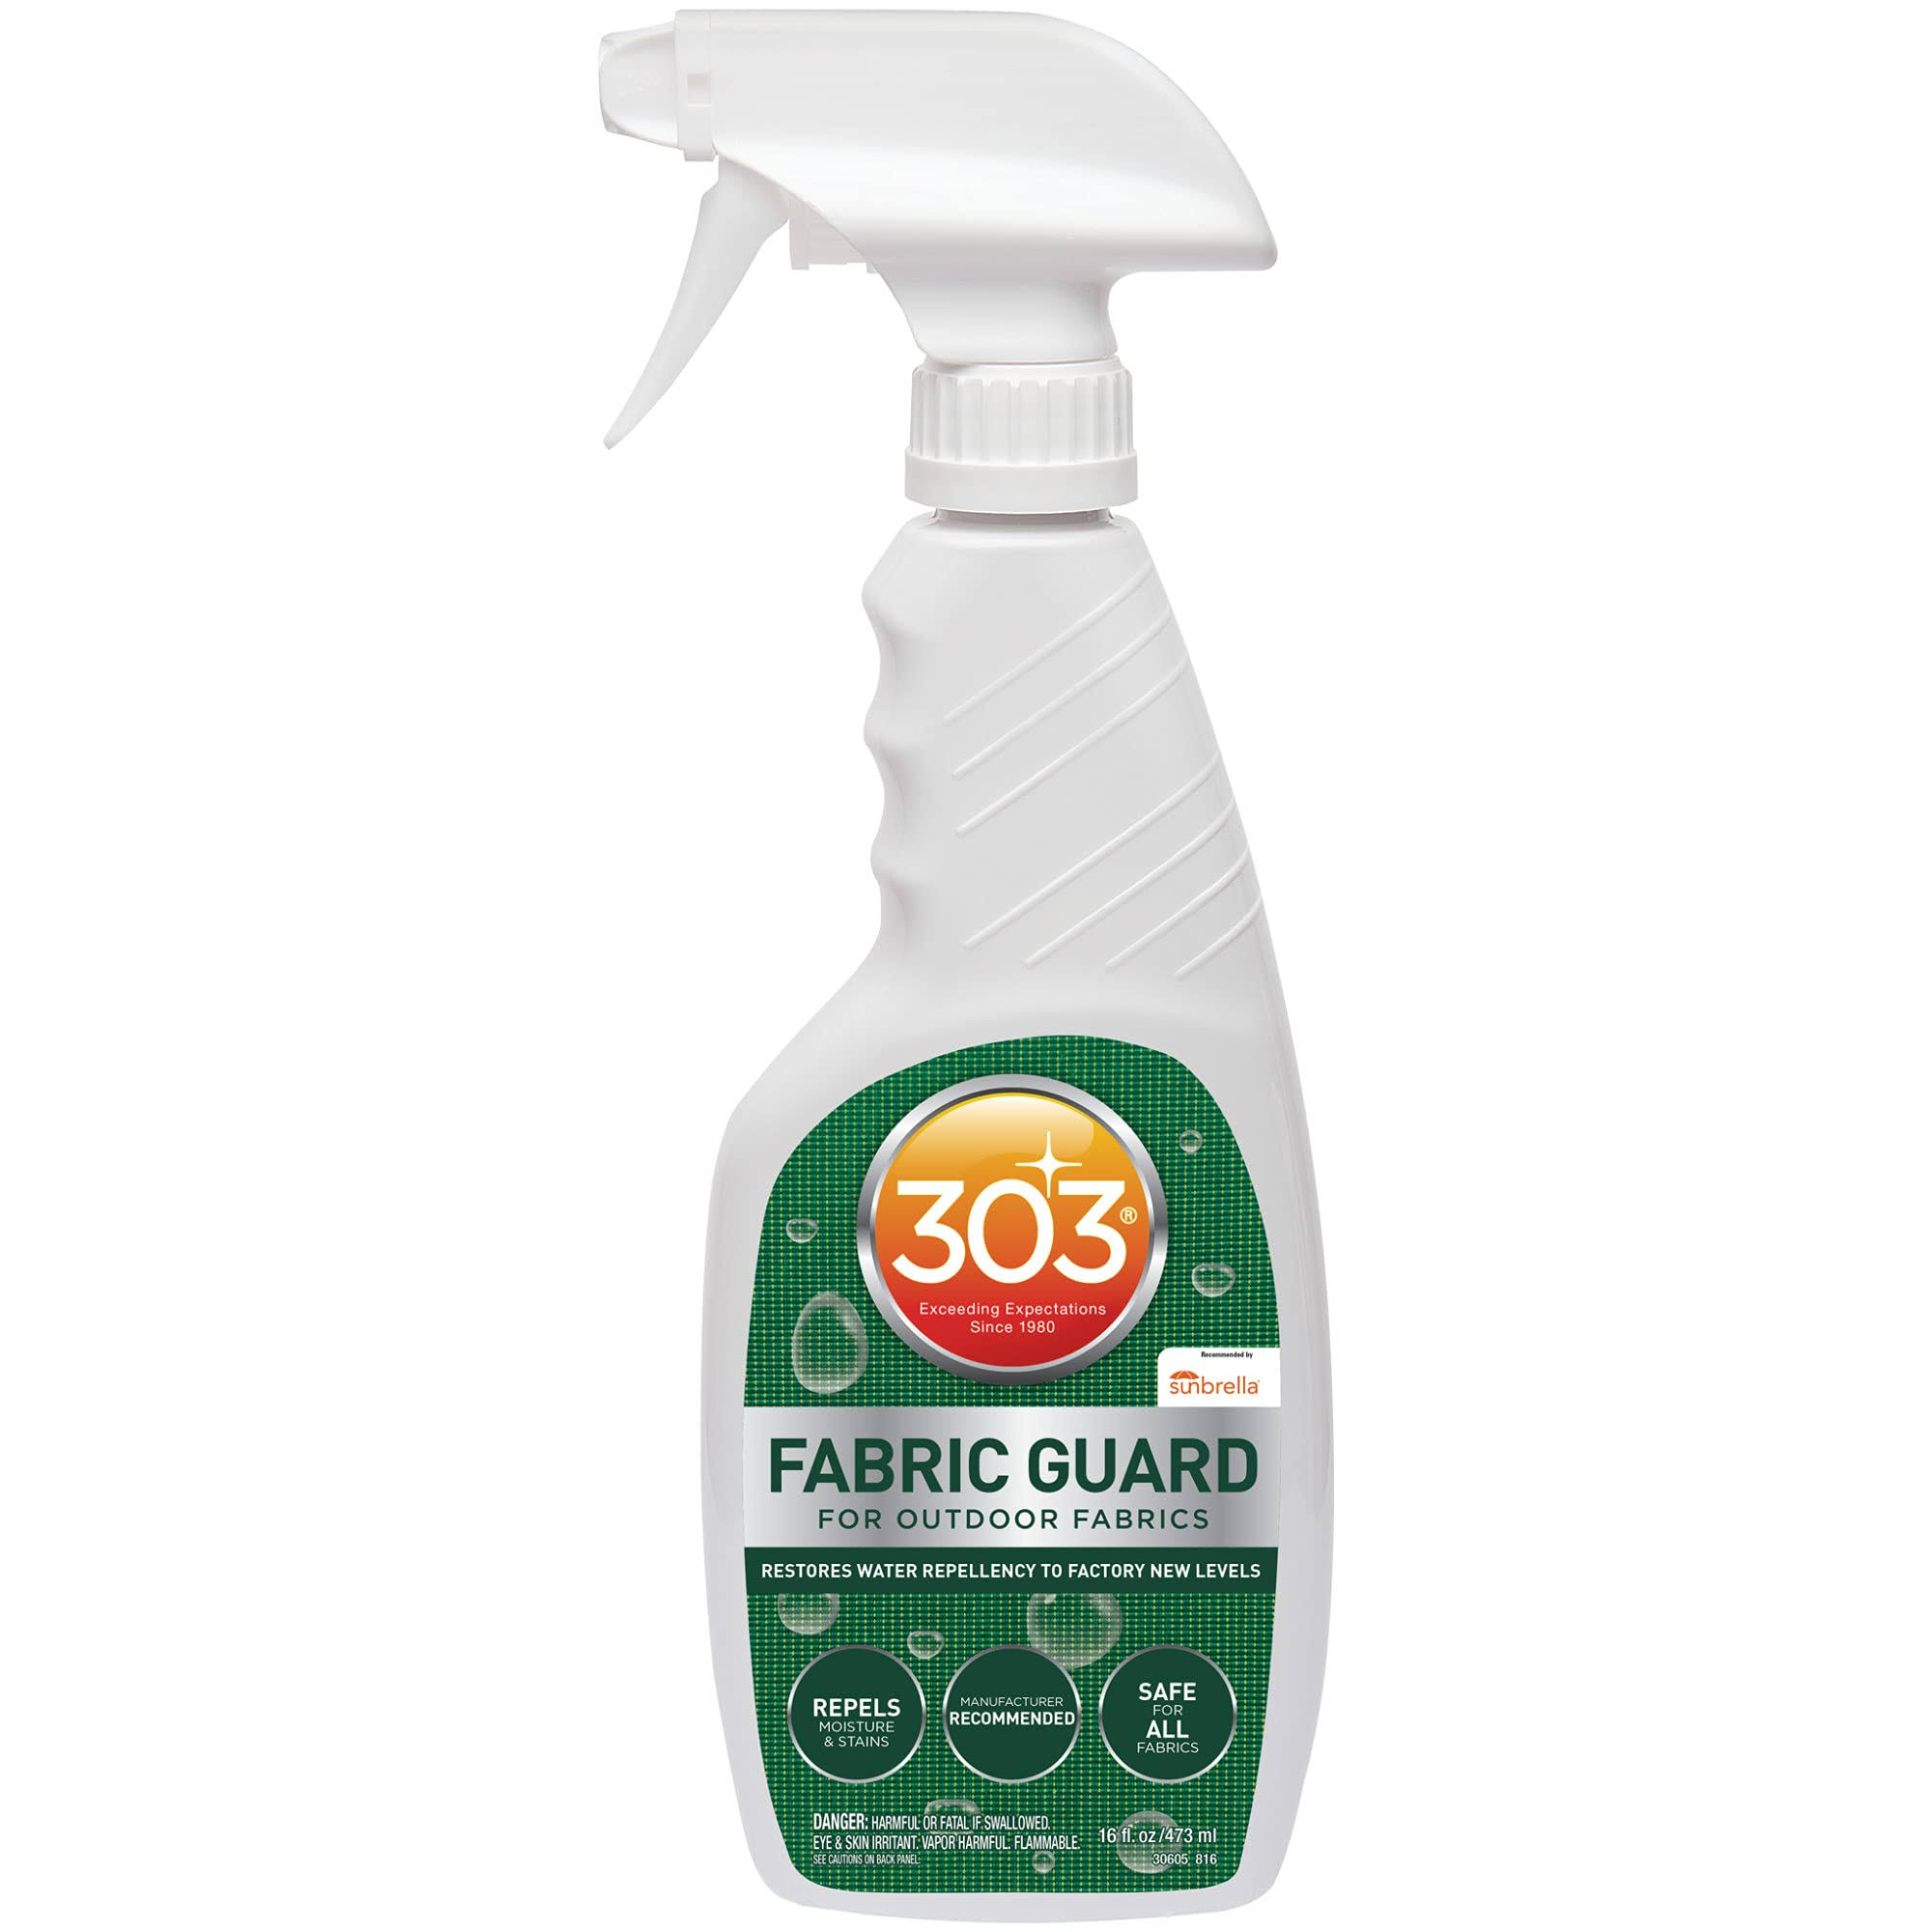 303 Fabric Guard Fabric Protectant Spray - 16 fl oz